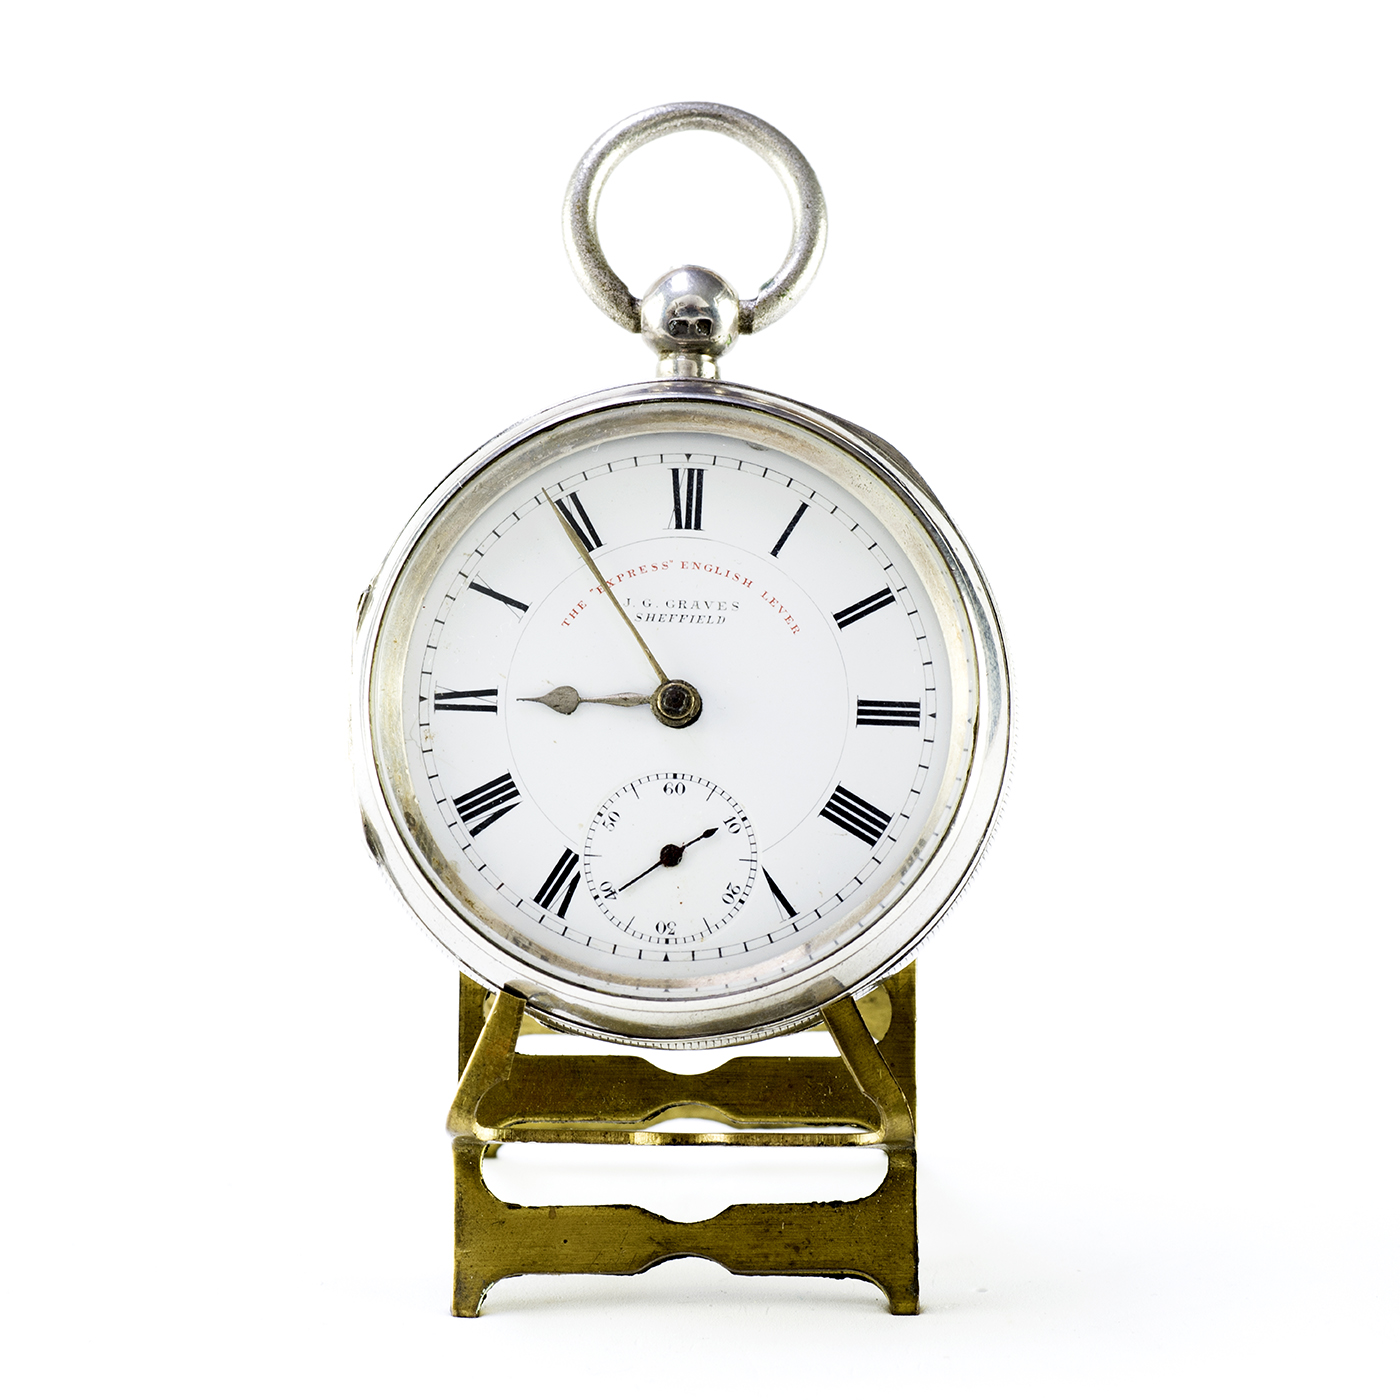 J.G. GRAVES. Reloj de bolsillo, lepine, Half Fusee (Semicatalino). Sheffield, año 1900.